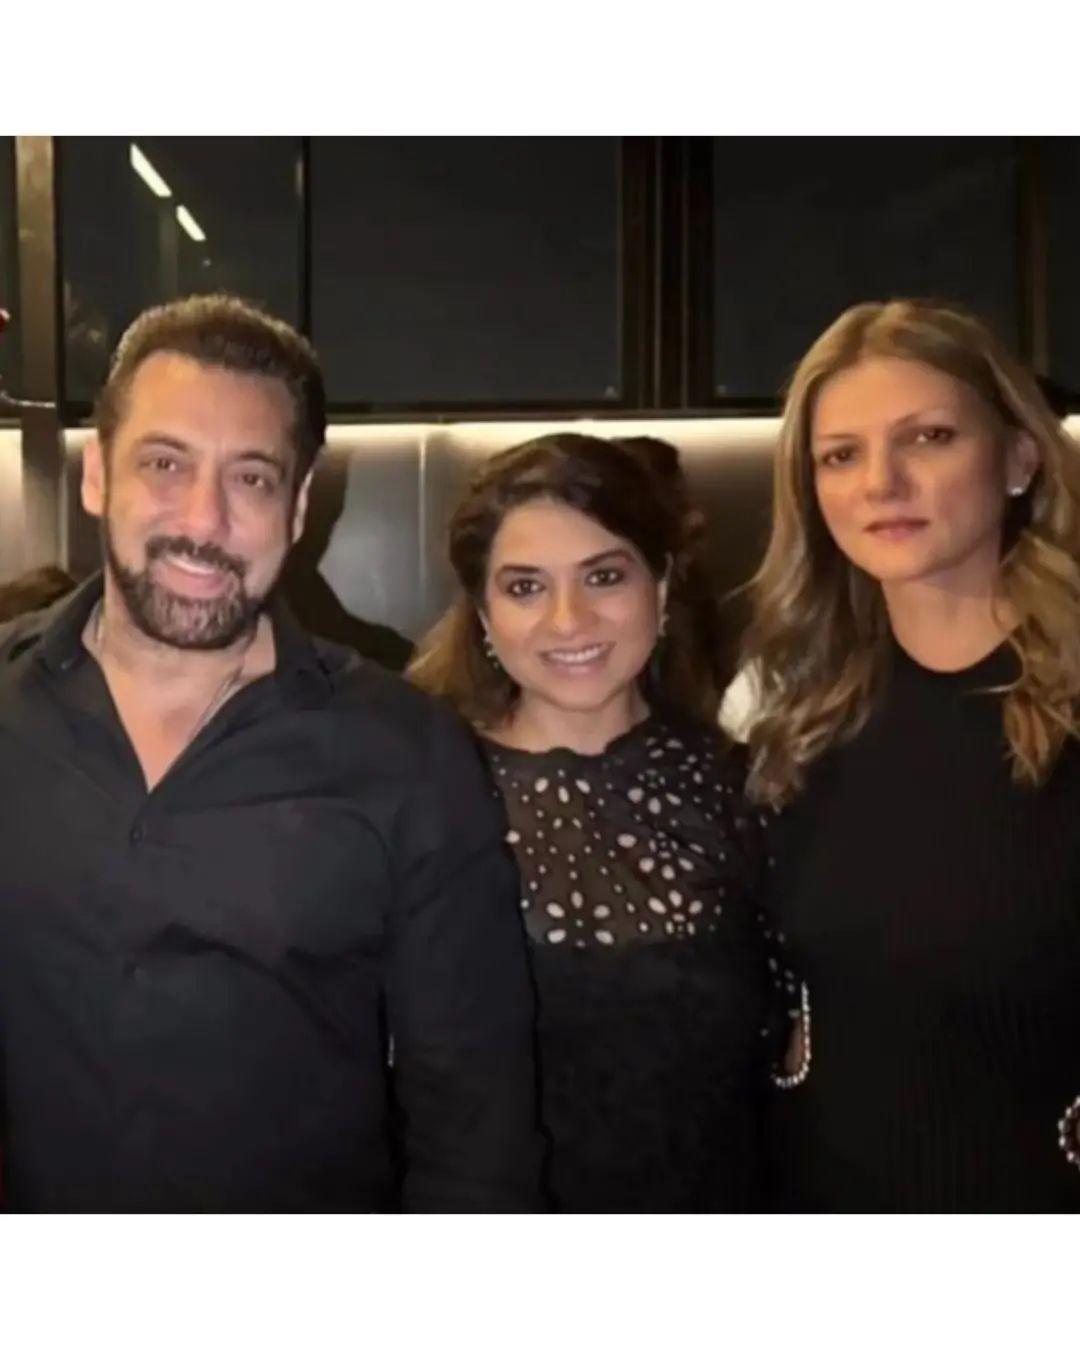 Fashion designer Nandita Mahtani posed alongside Salman Khan for a picture from the night!